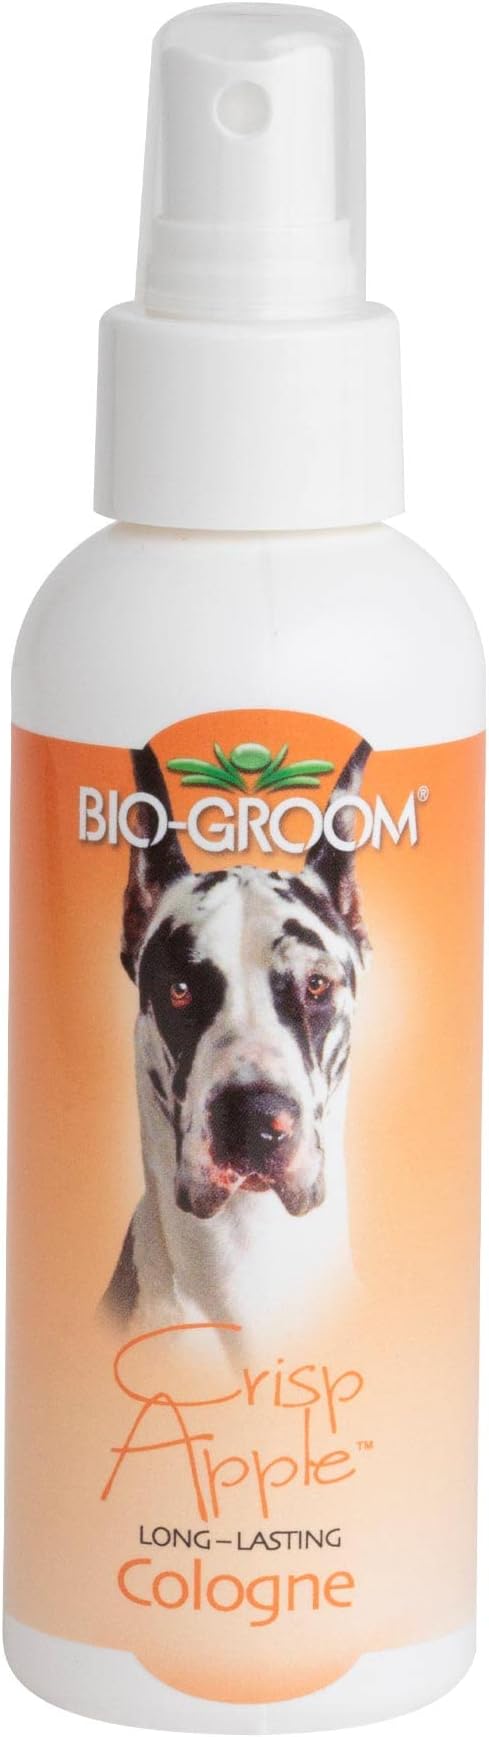 Bio-Groom Crisp Apple Long Lasting Dog Cologne Spray 118ml